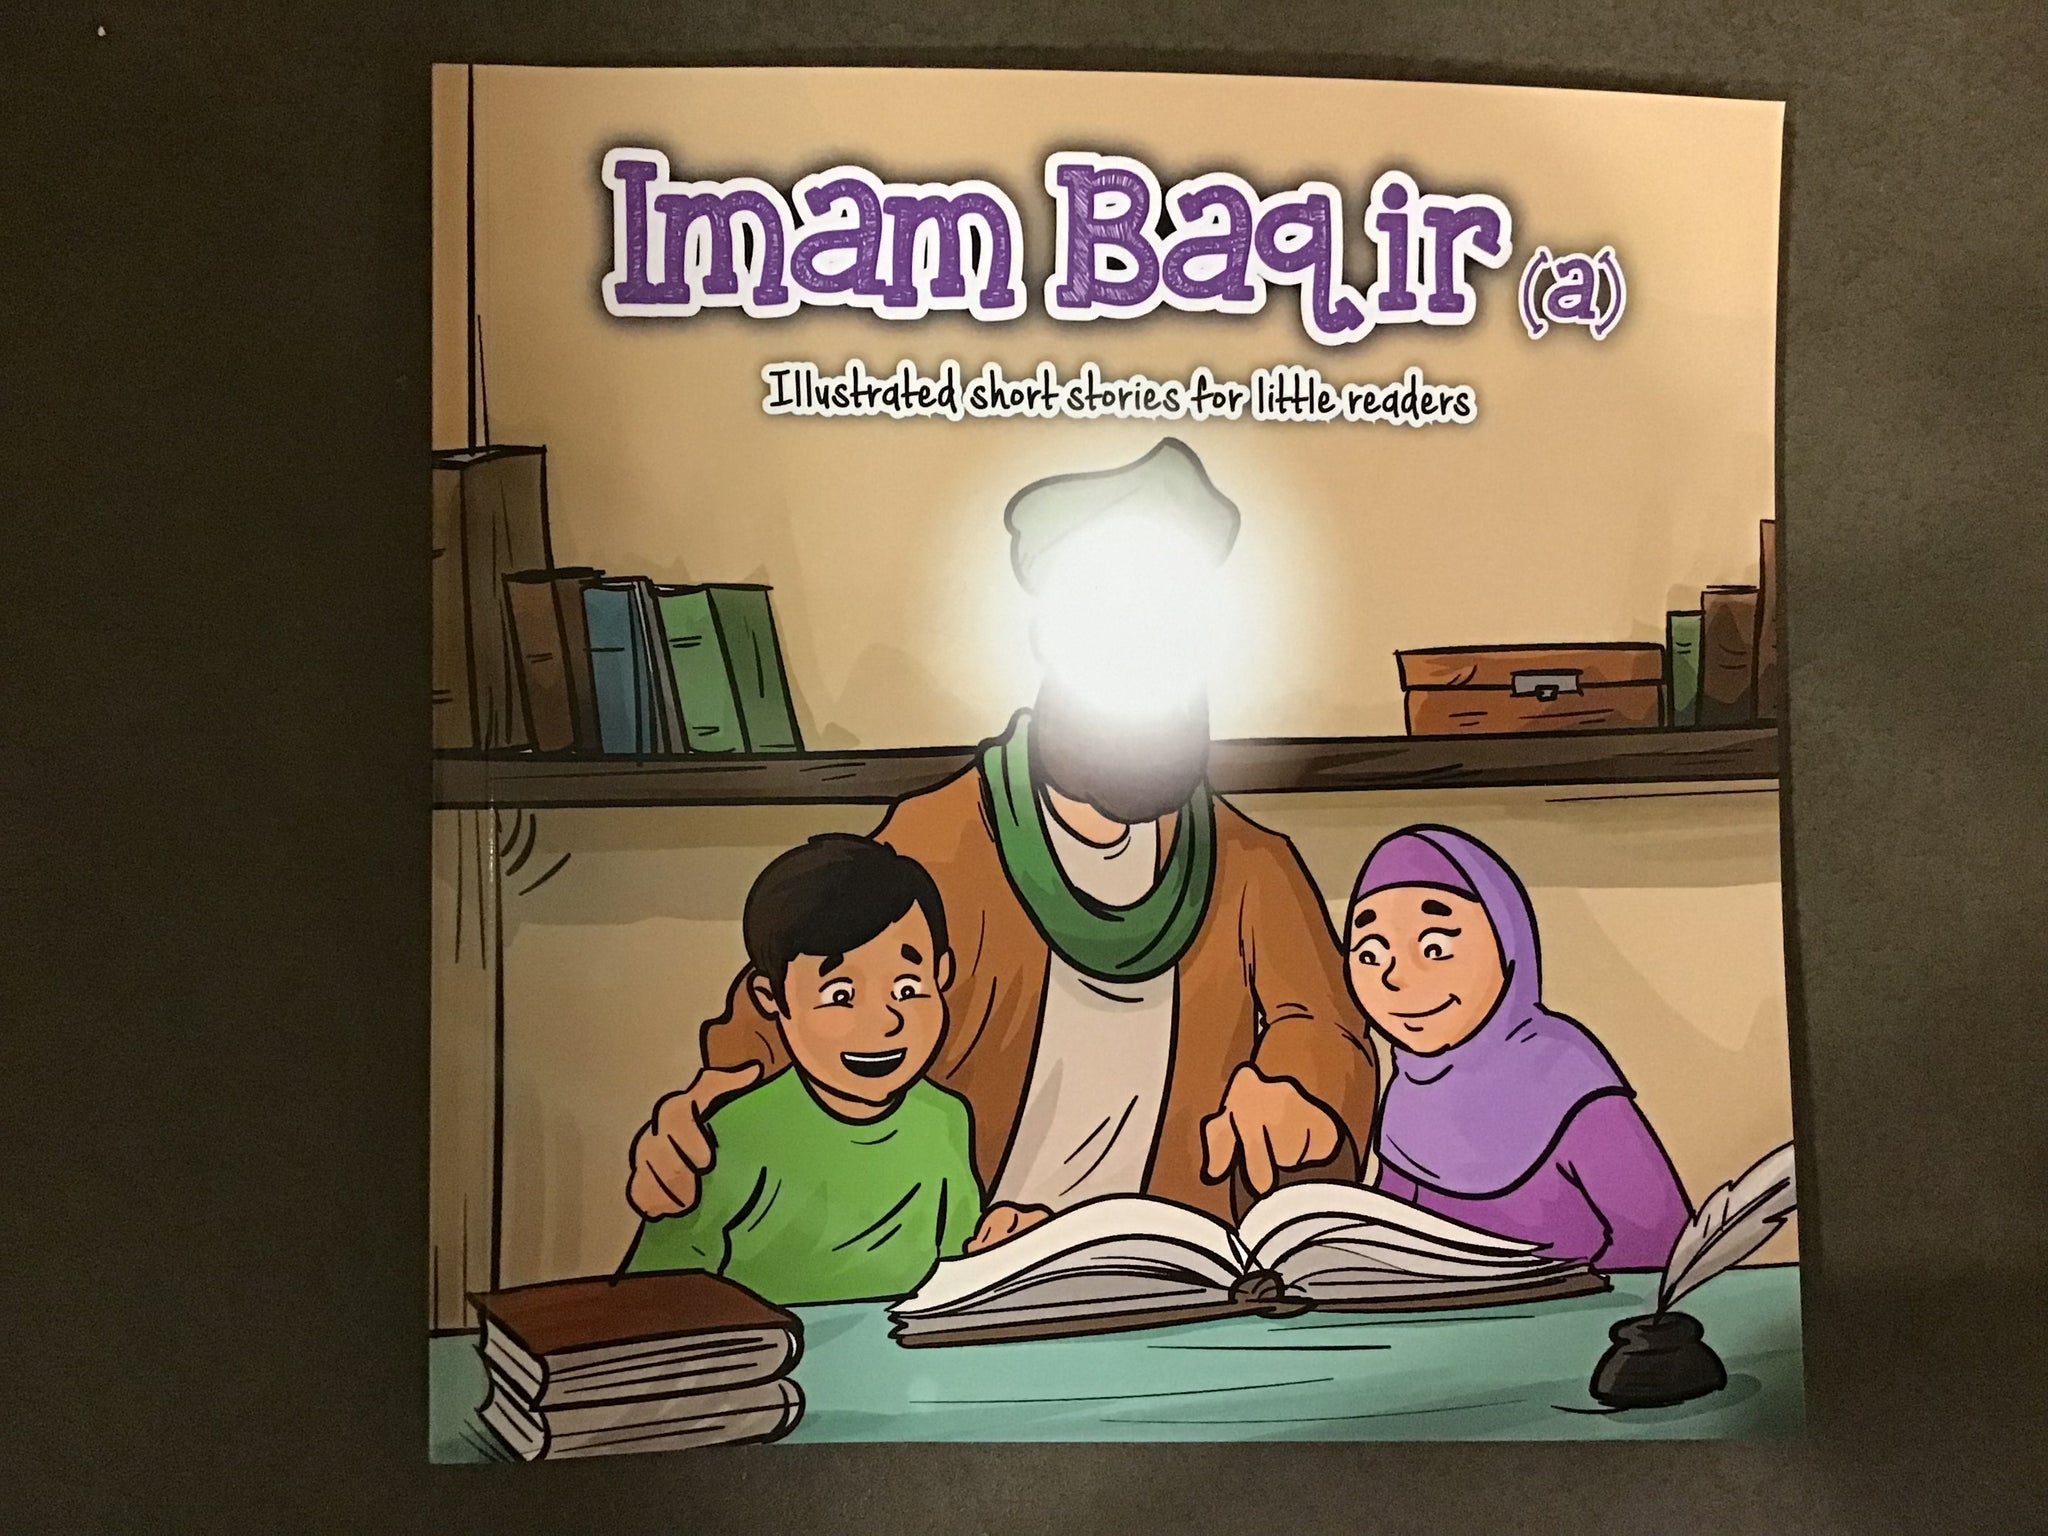 Imam Baqir Illustrated short stories